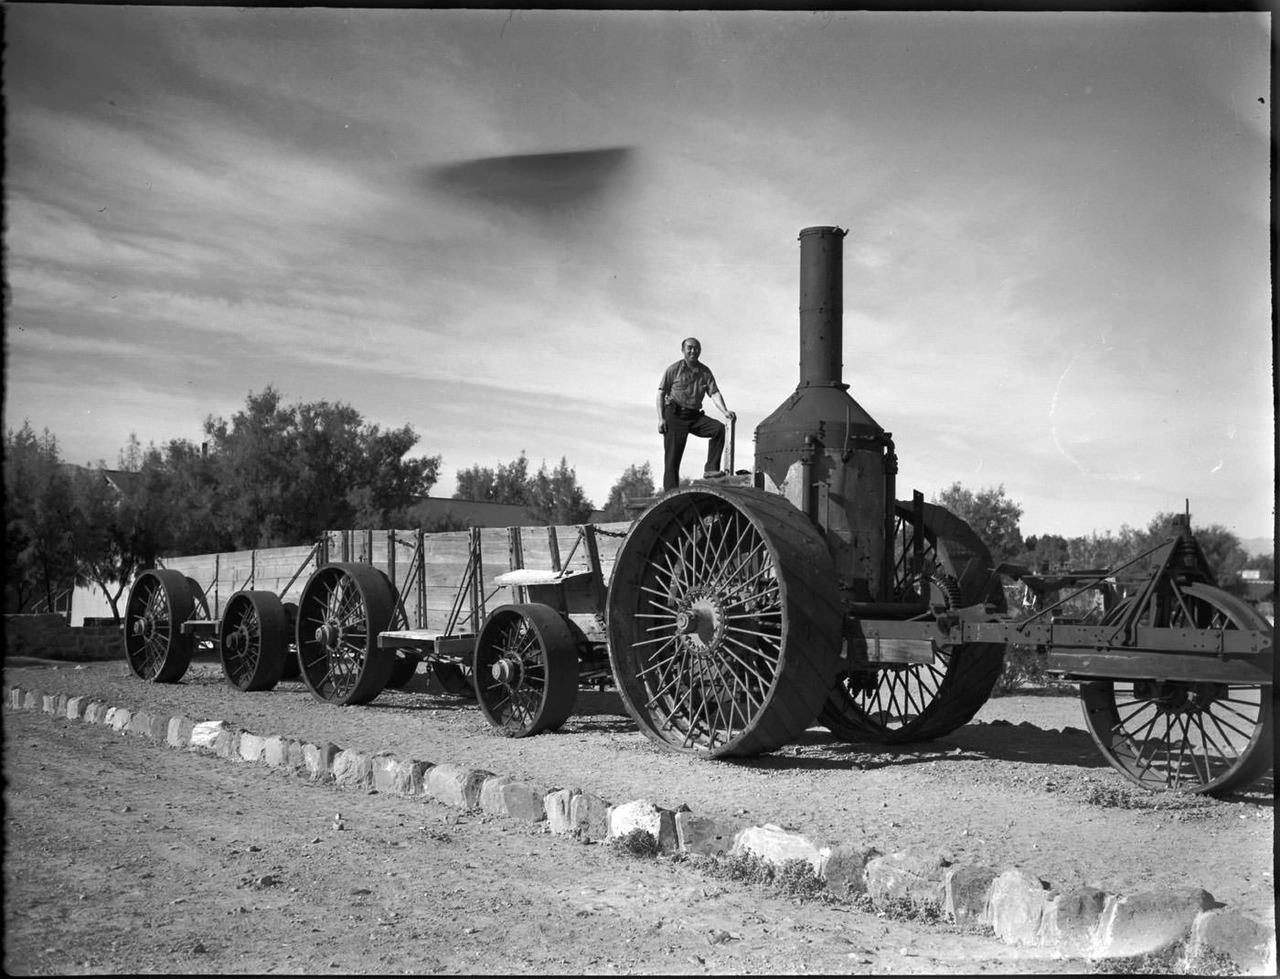 Death Valley
1939
Source: University of Utah, Salt Lake Tribune Negative Collection